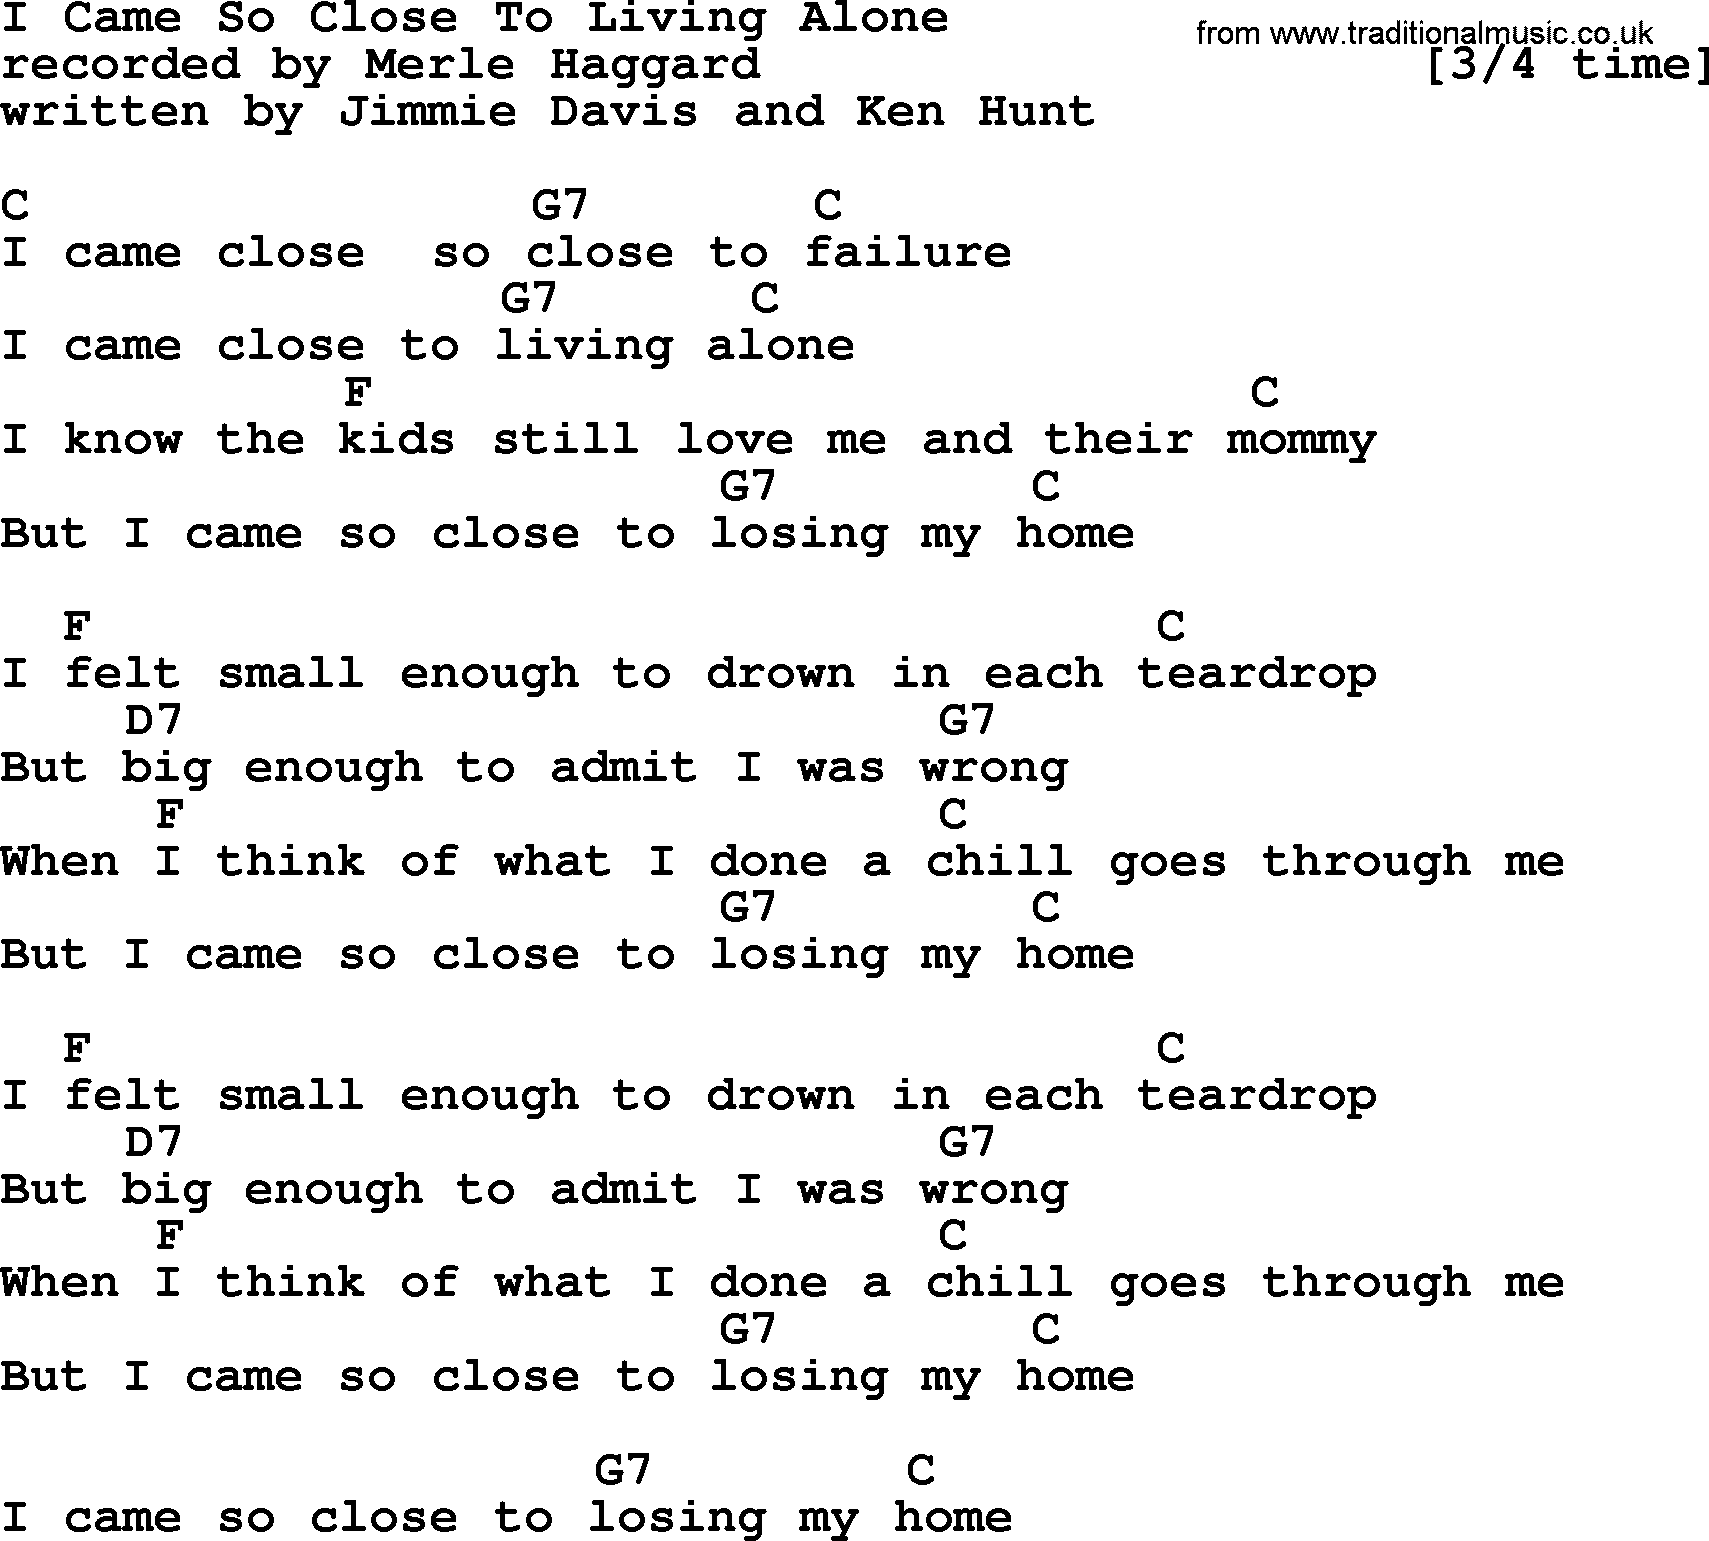 Merle Haggard song: I Came So Close To Living Alone, lyrics and chords